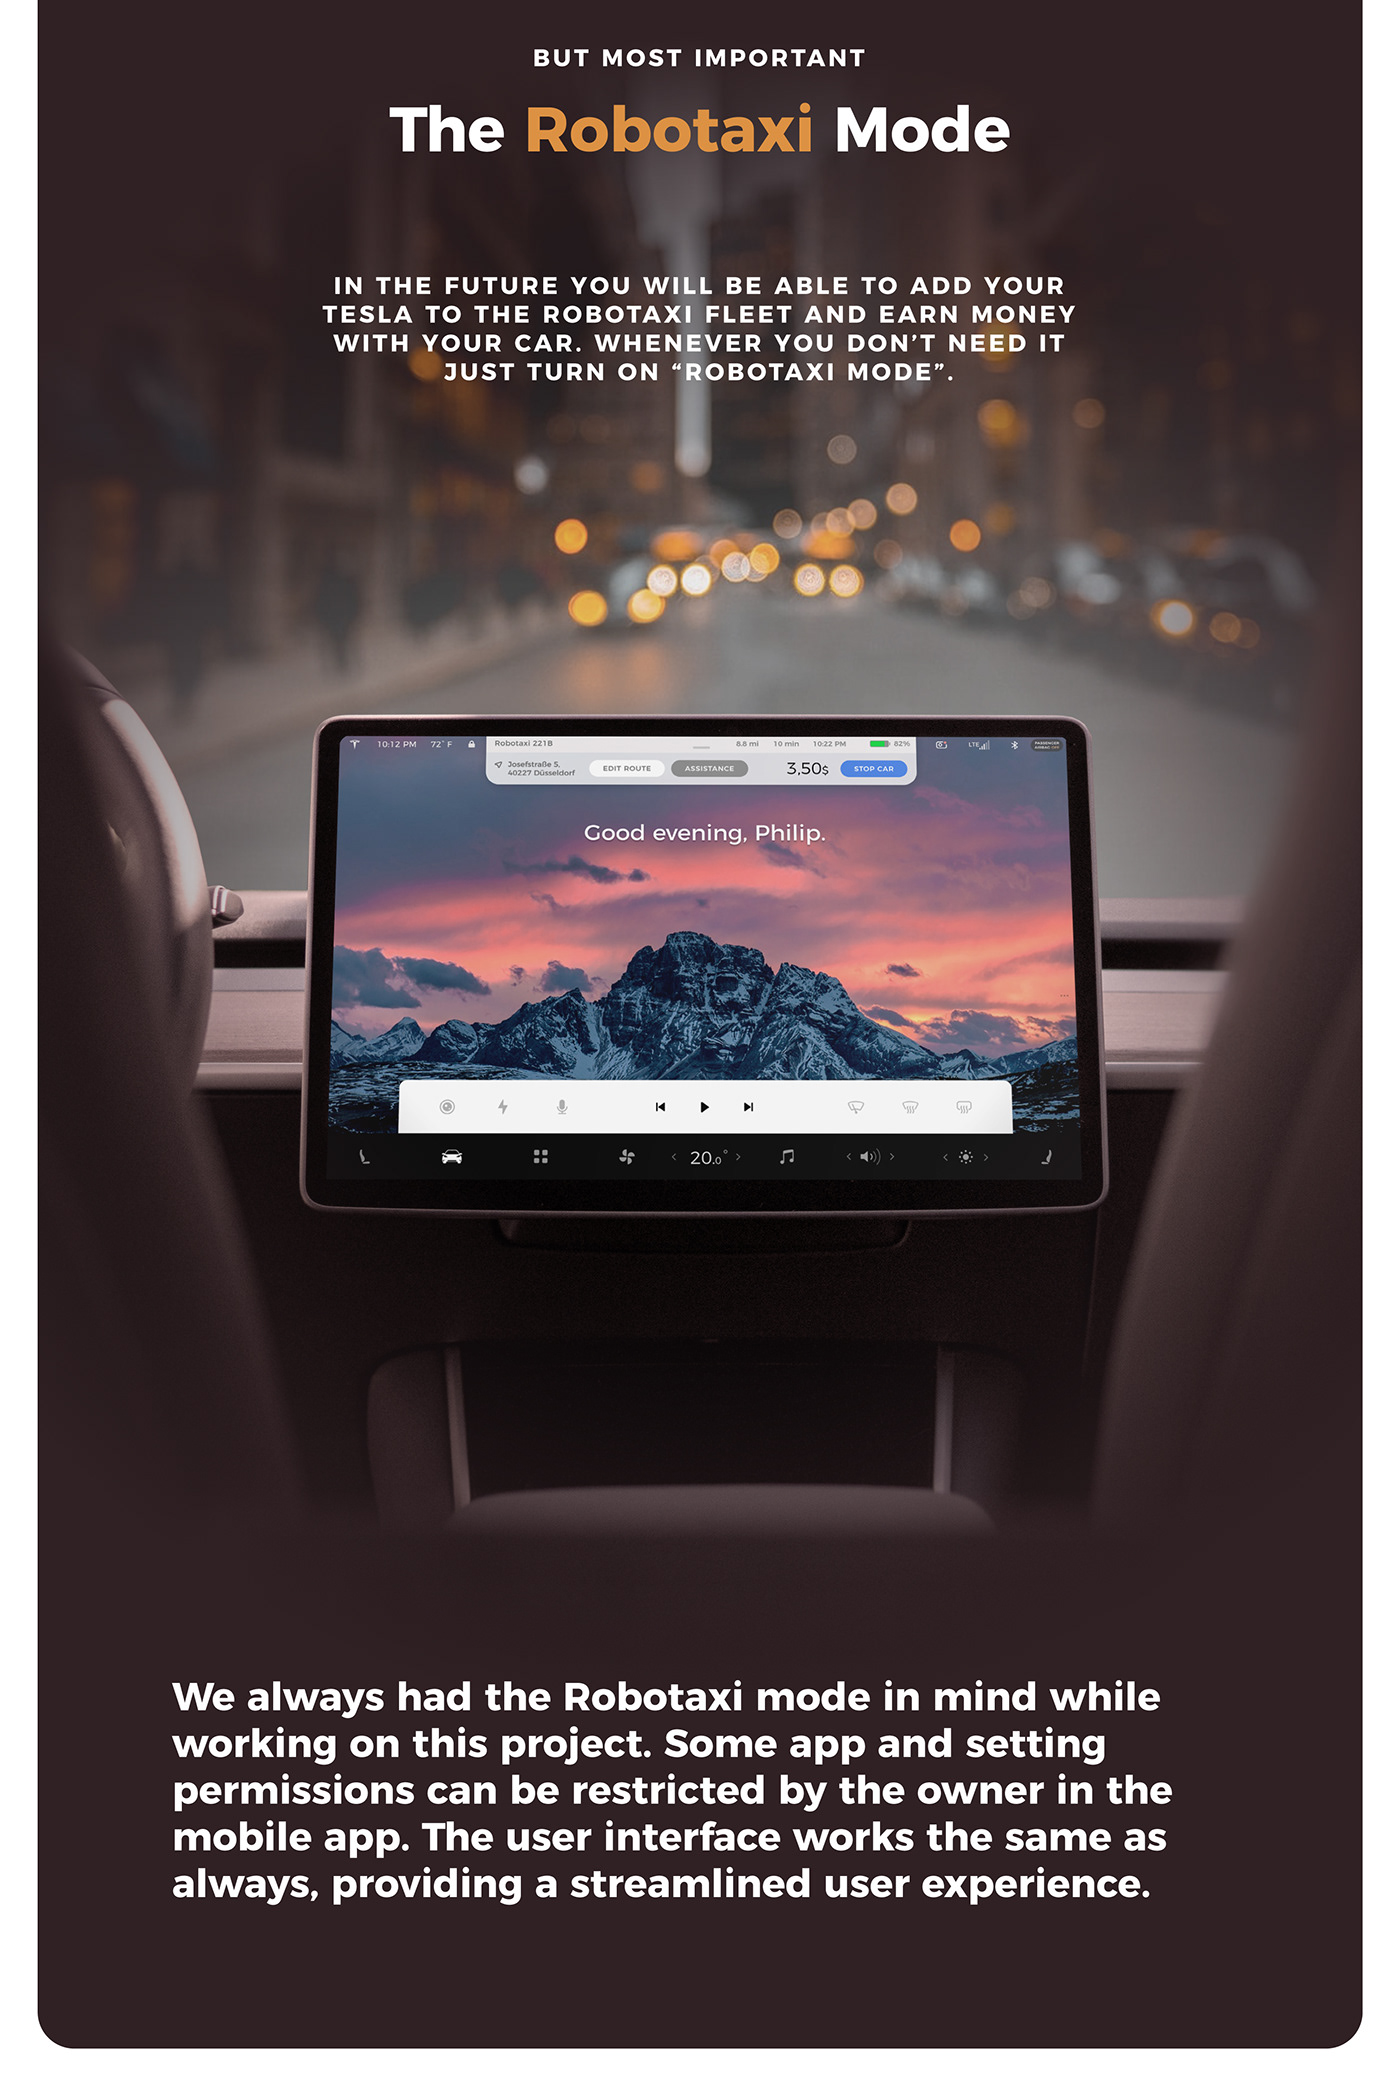 Autonomous Autonomy Display Driving ev Model 3 tesla free Mockup Elon Musk